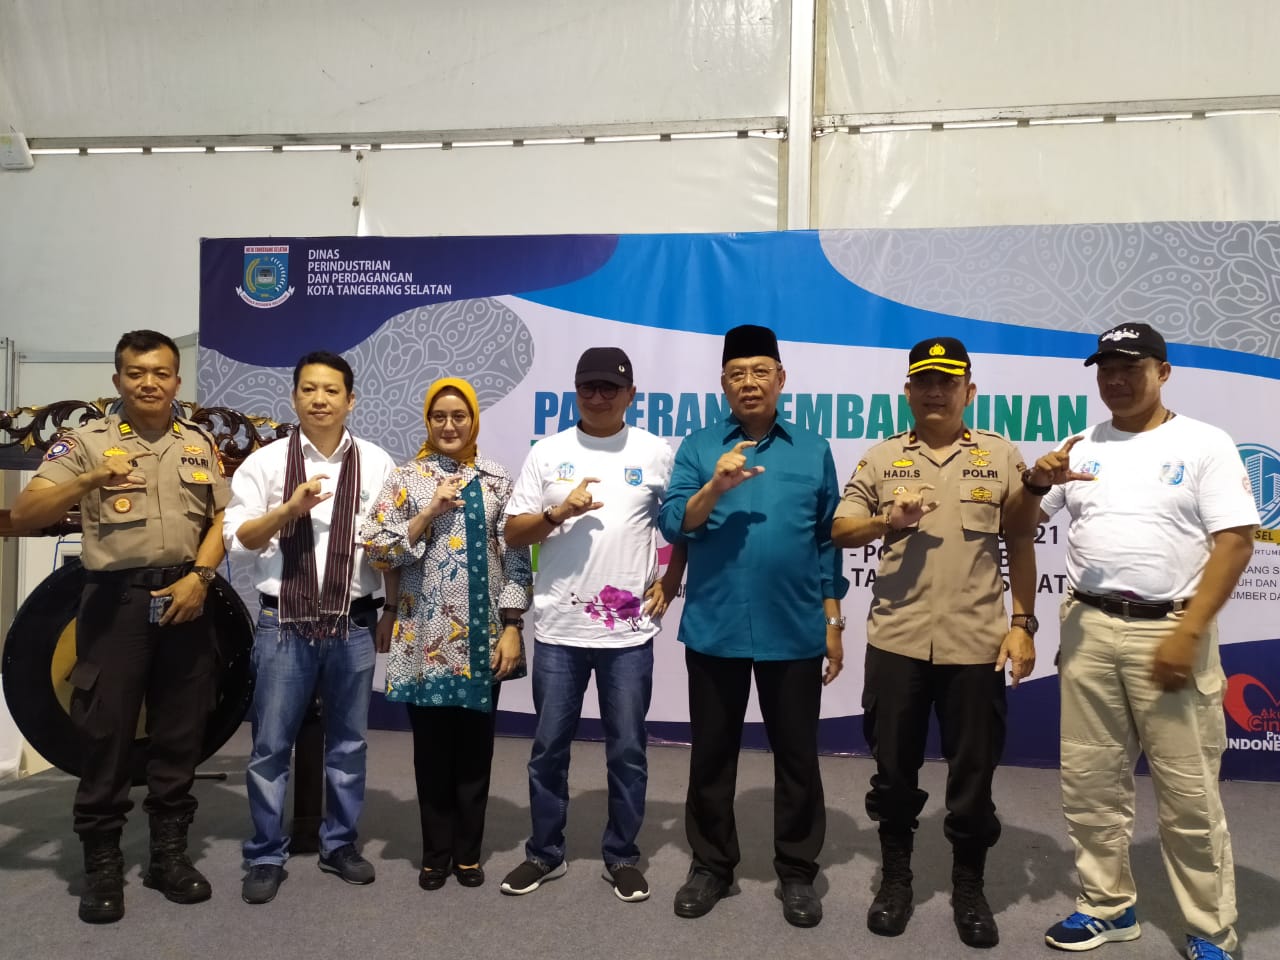 Kegiatan pameran pembangunan Kota Tangerang Selatan di Lapangan Skadron 21 Sena, Jalan Raya Pondok Cabe, Pamulang, Tangsel, Sabtu (23/11/2019).